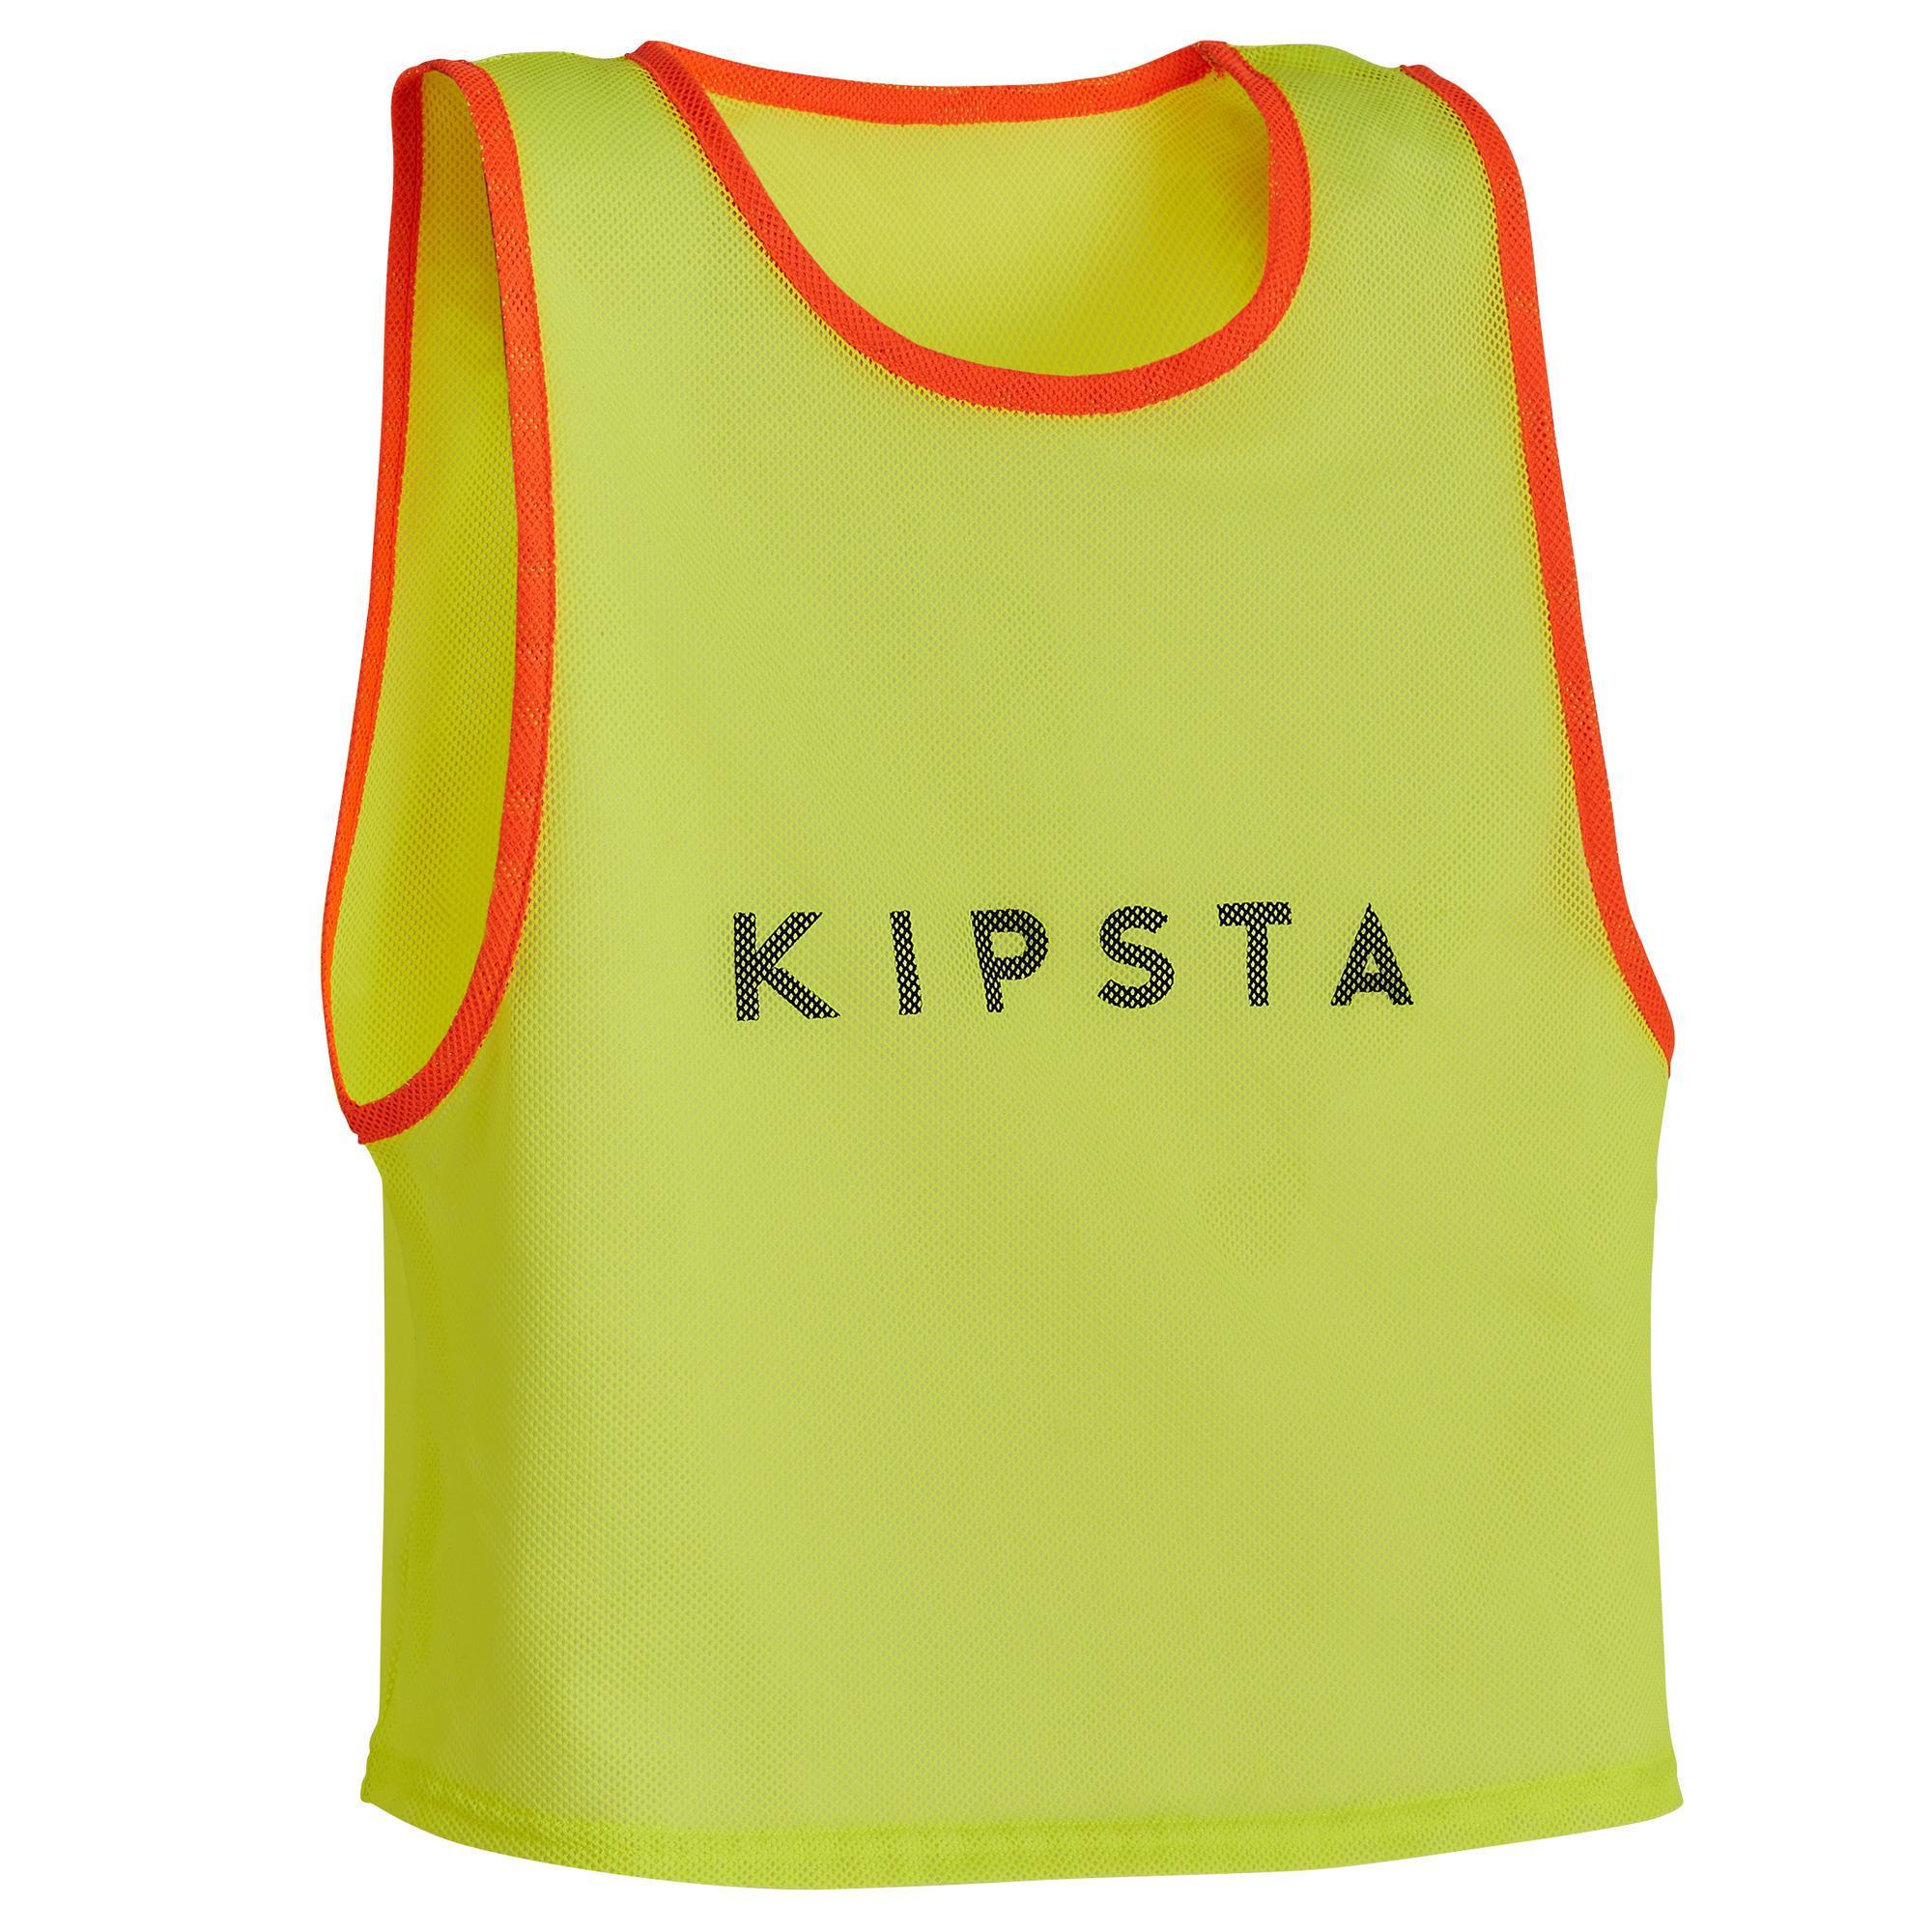 Kipsta детский футбольный комбинезон флуоресцентно-желтый